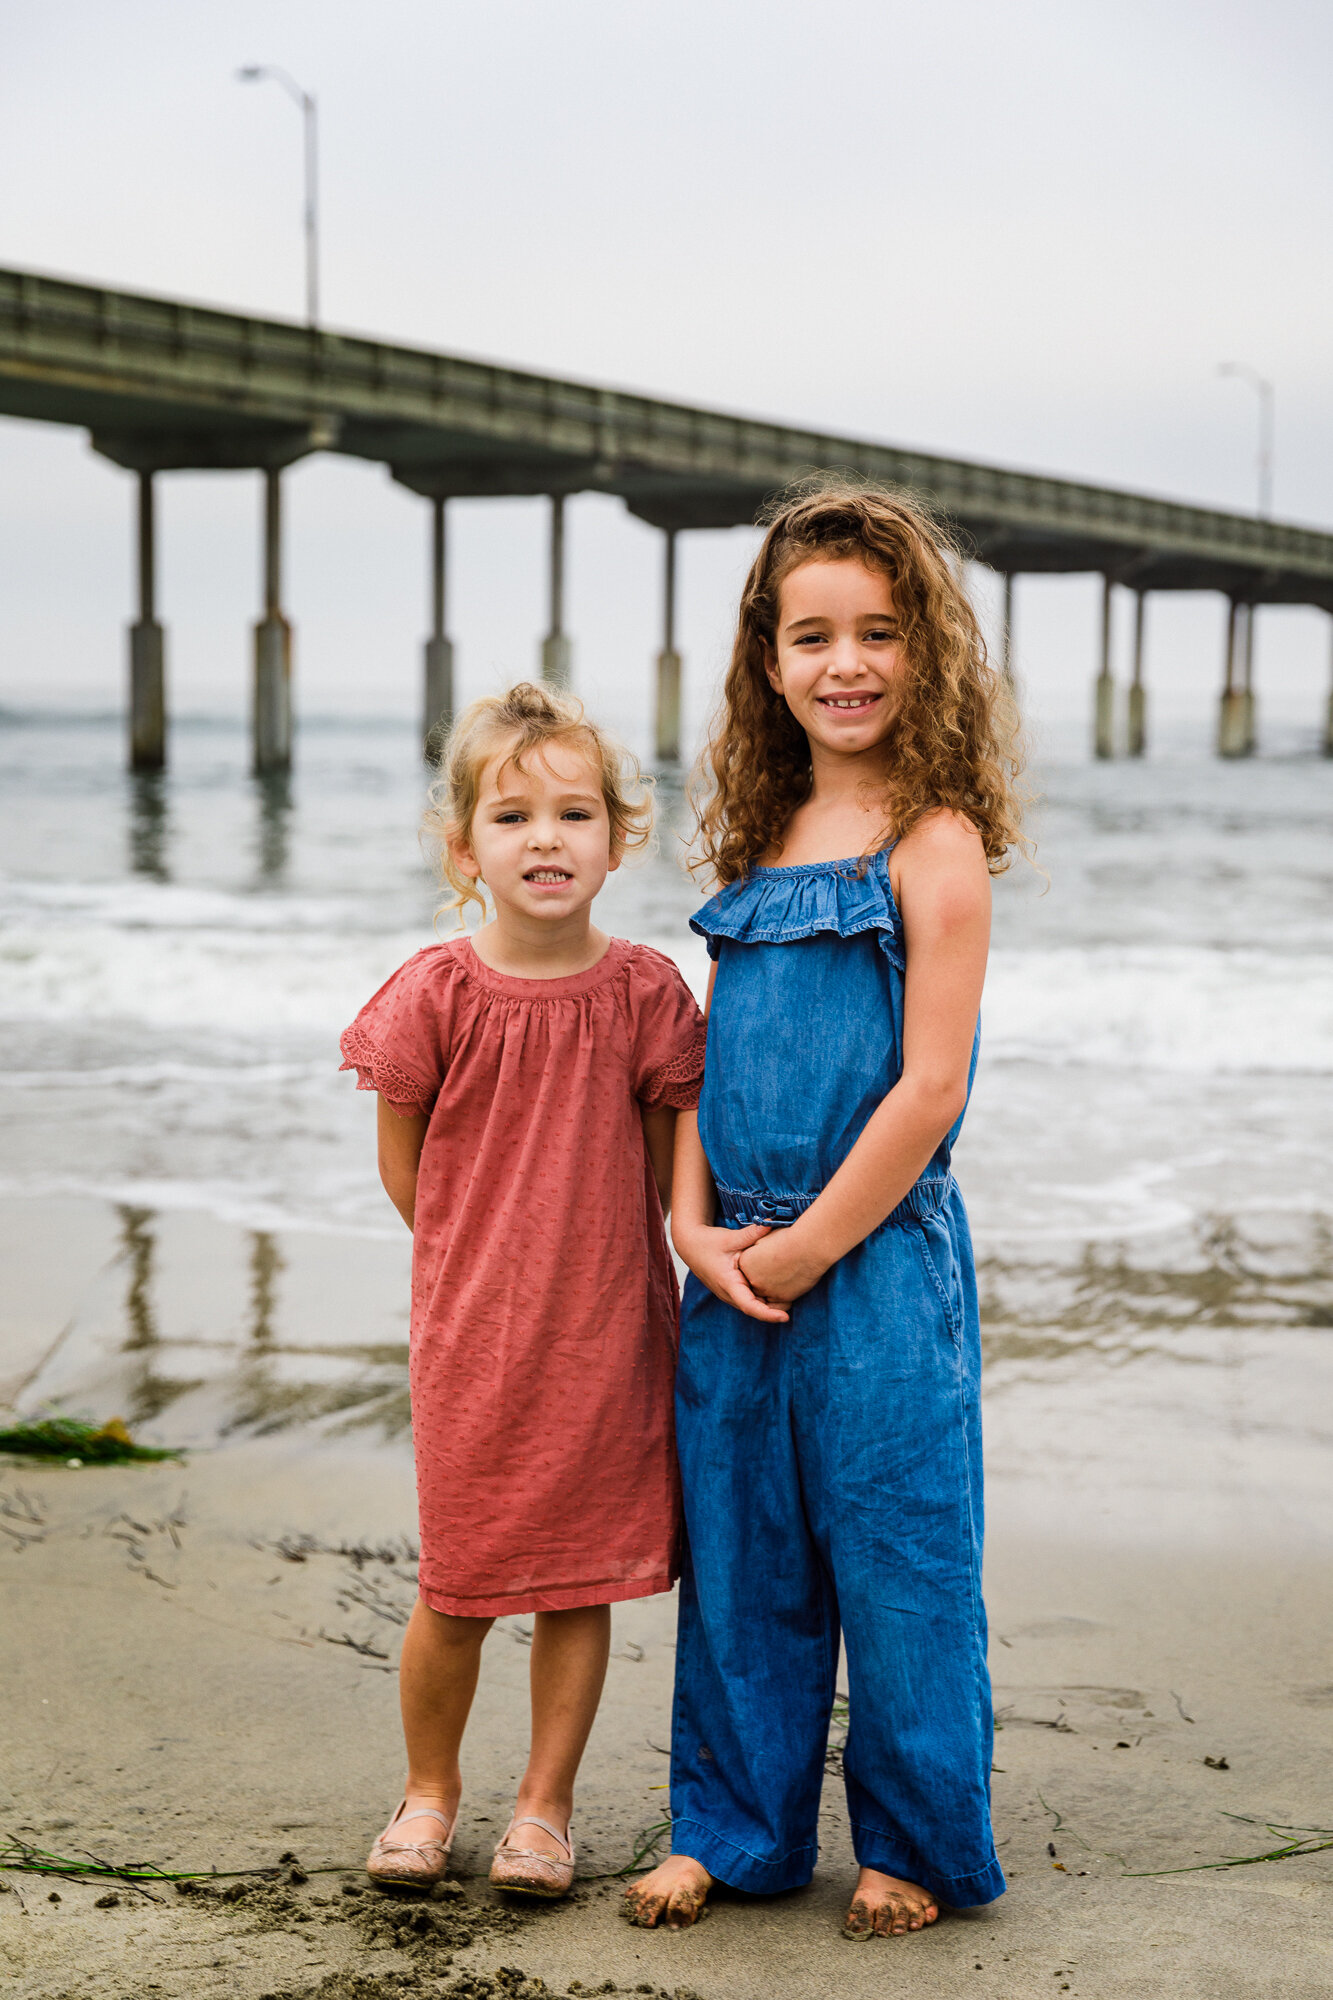 Family Portrait Photography Session at Ocean Beach Pier, San Diego, California-26.jpg